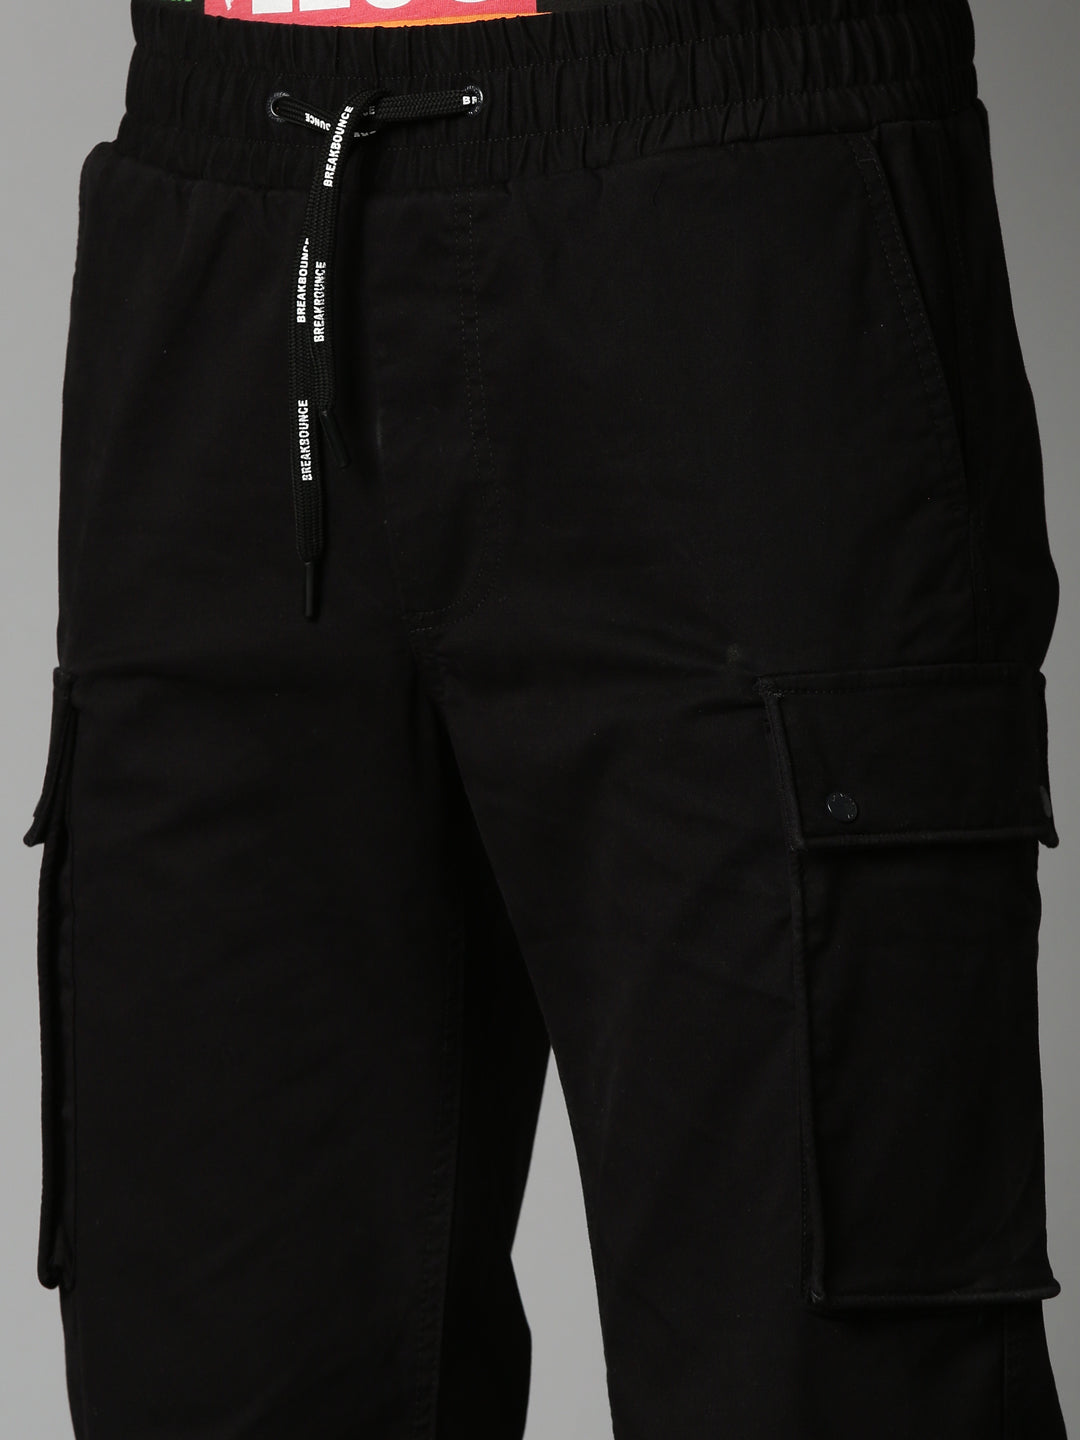 Buy Breakbounce Beige Slim Fit Chino Trousers - Trousers for Men 1312715 |  Myntra